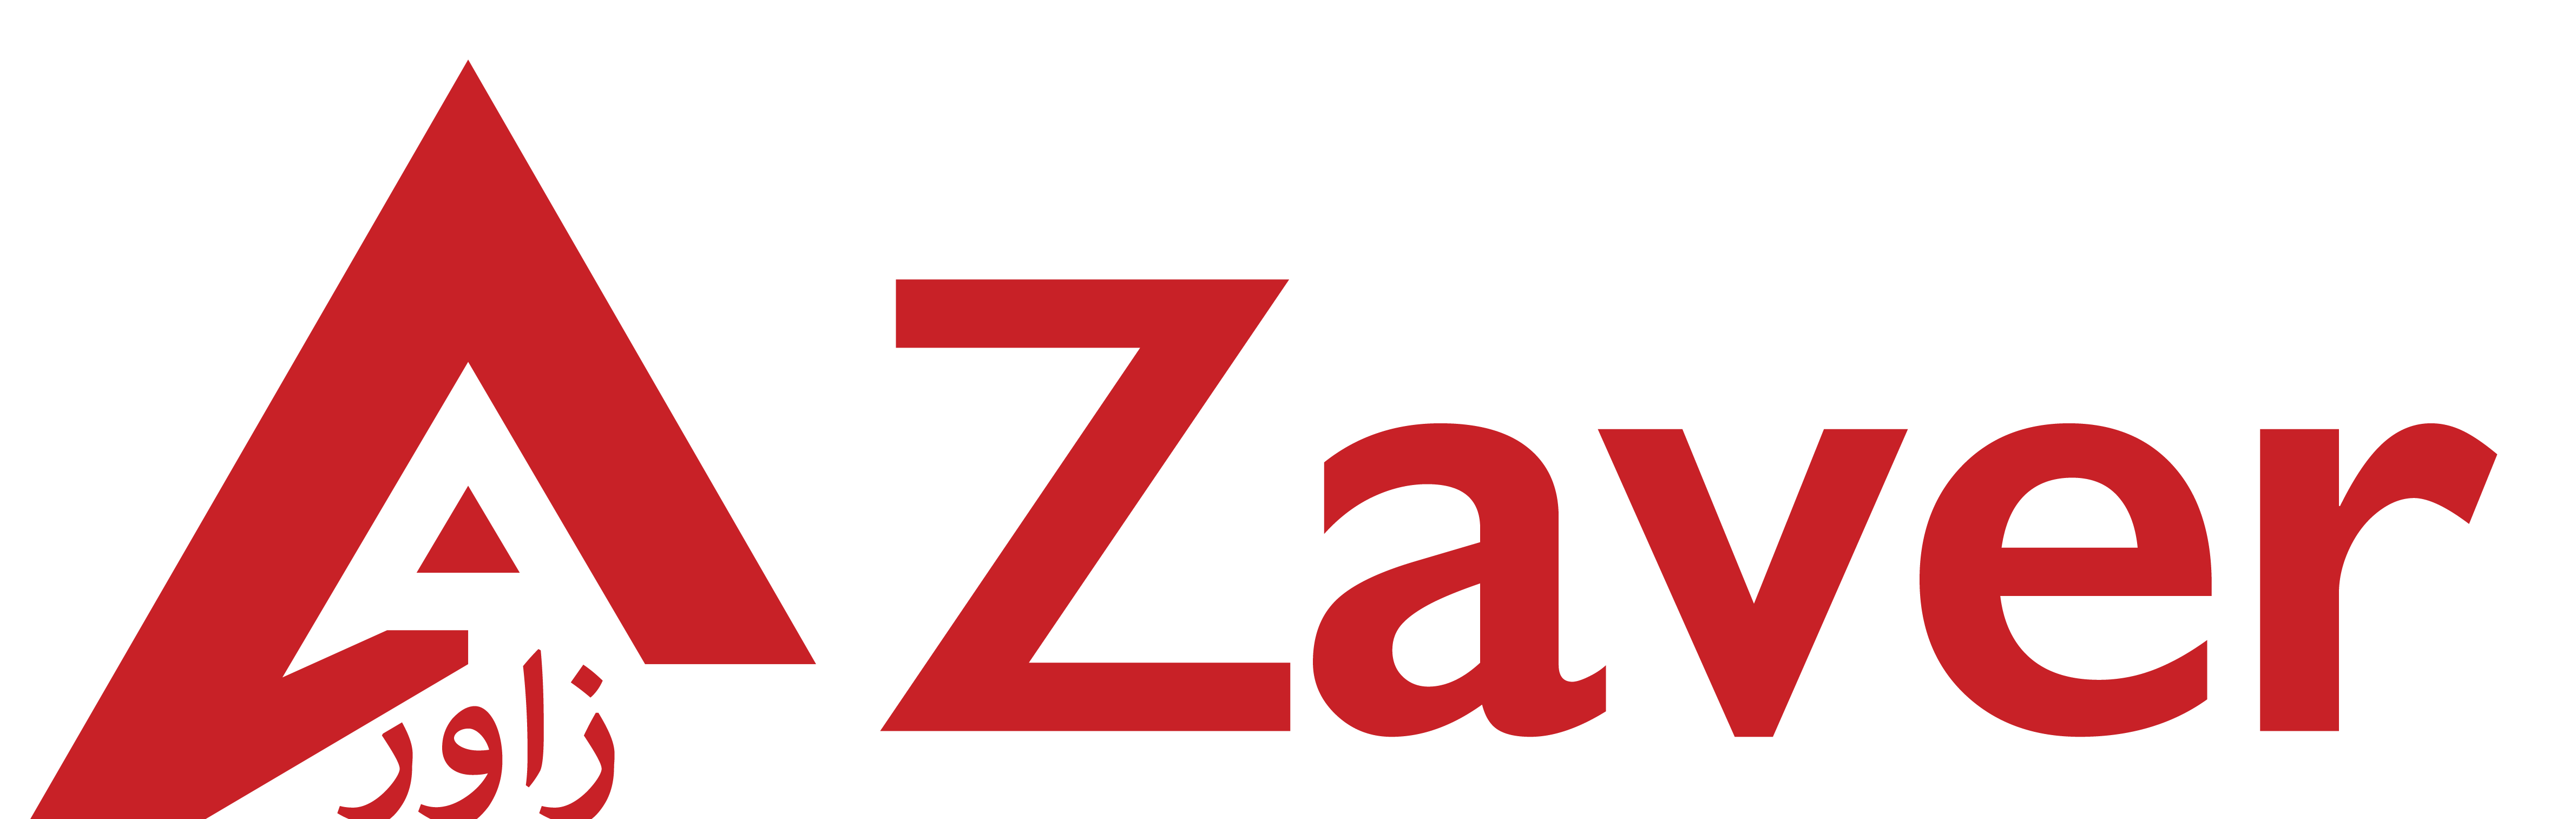 Zaver Tile Industrial Group